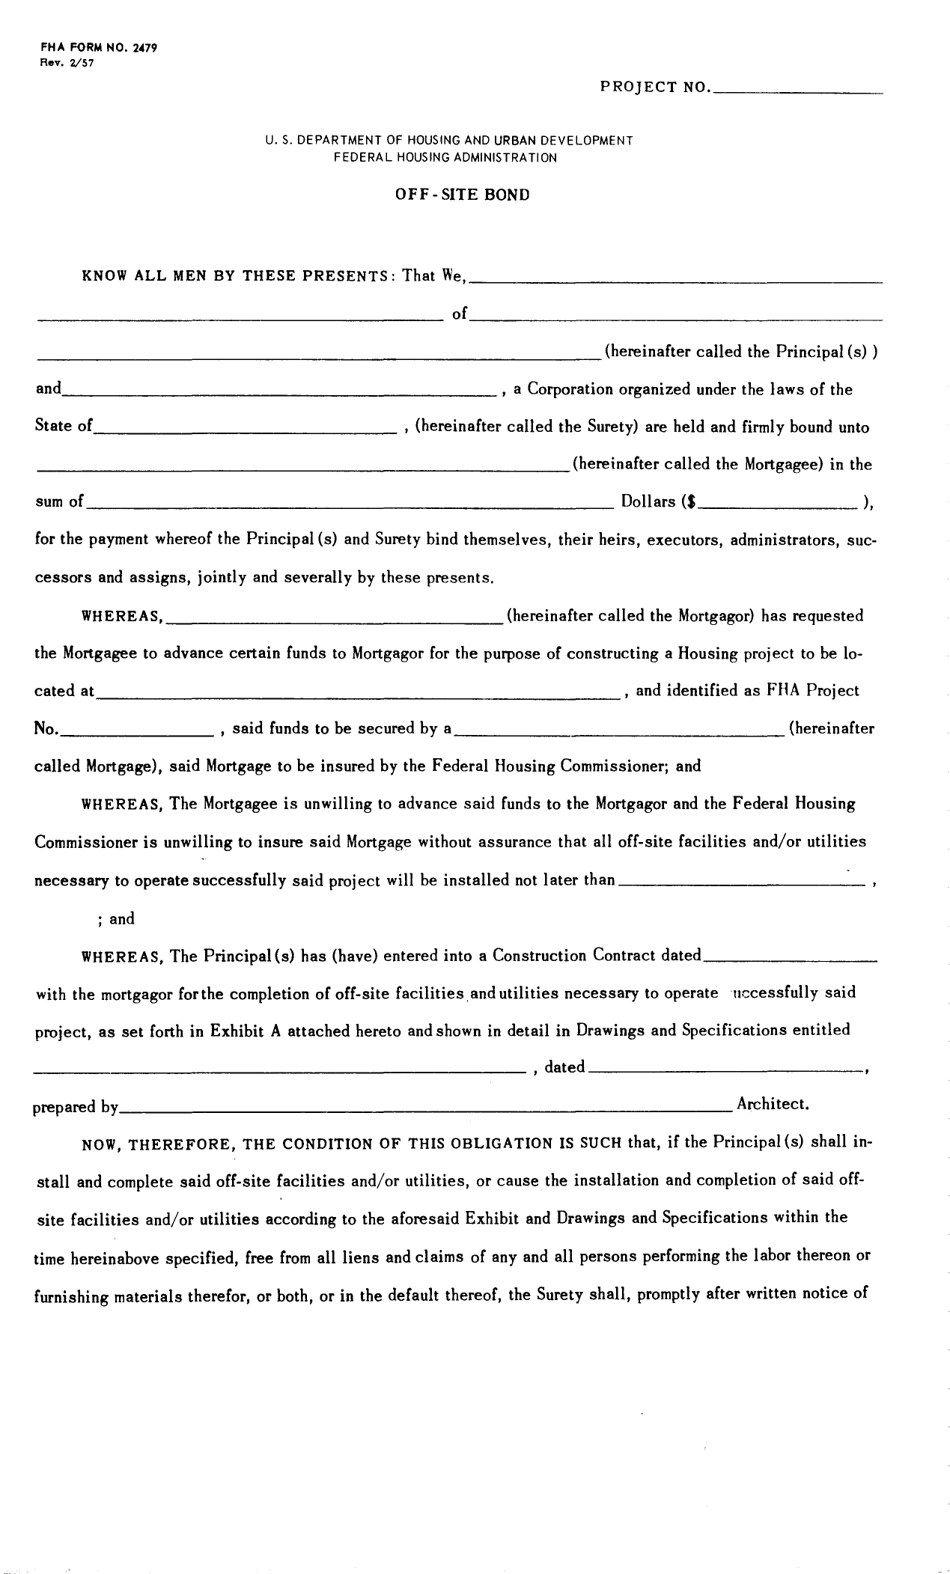 Form FHA-2479 Off-Site Bond, Page 1